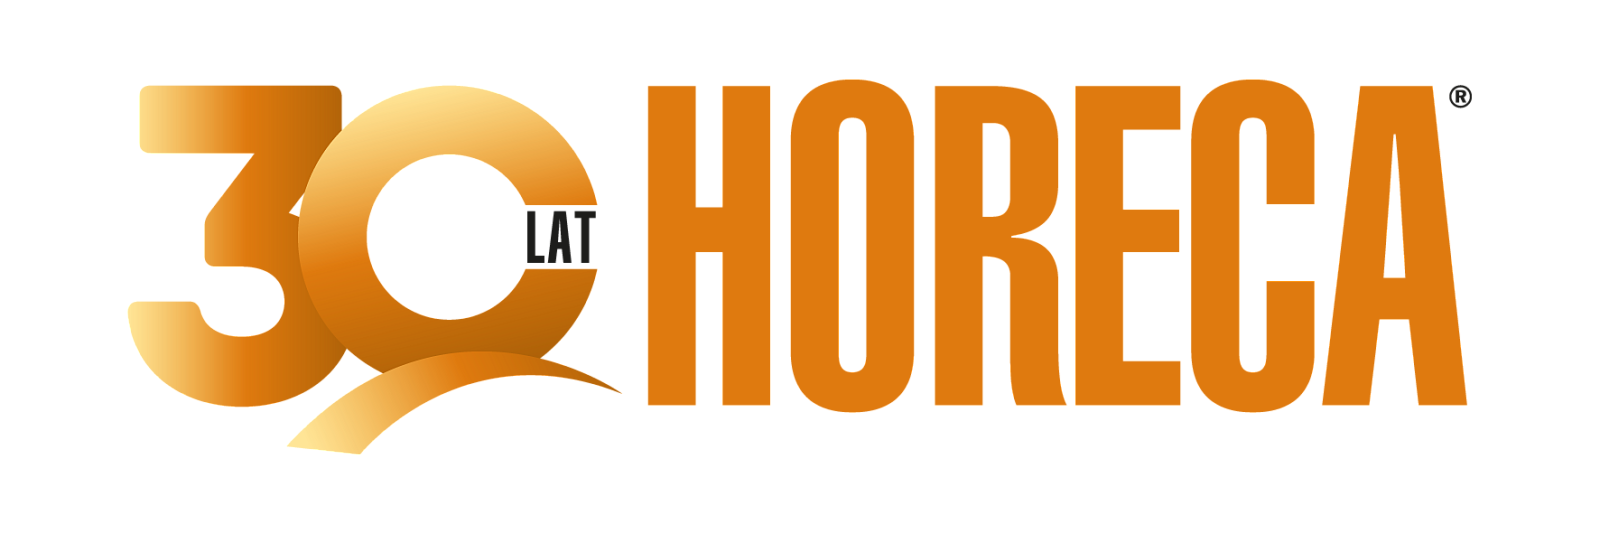 30-HORECA-logo-poziom(solo).png [50.01 KB]